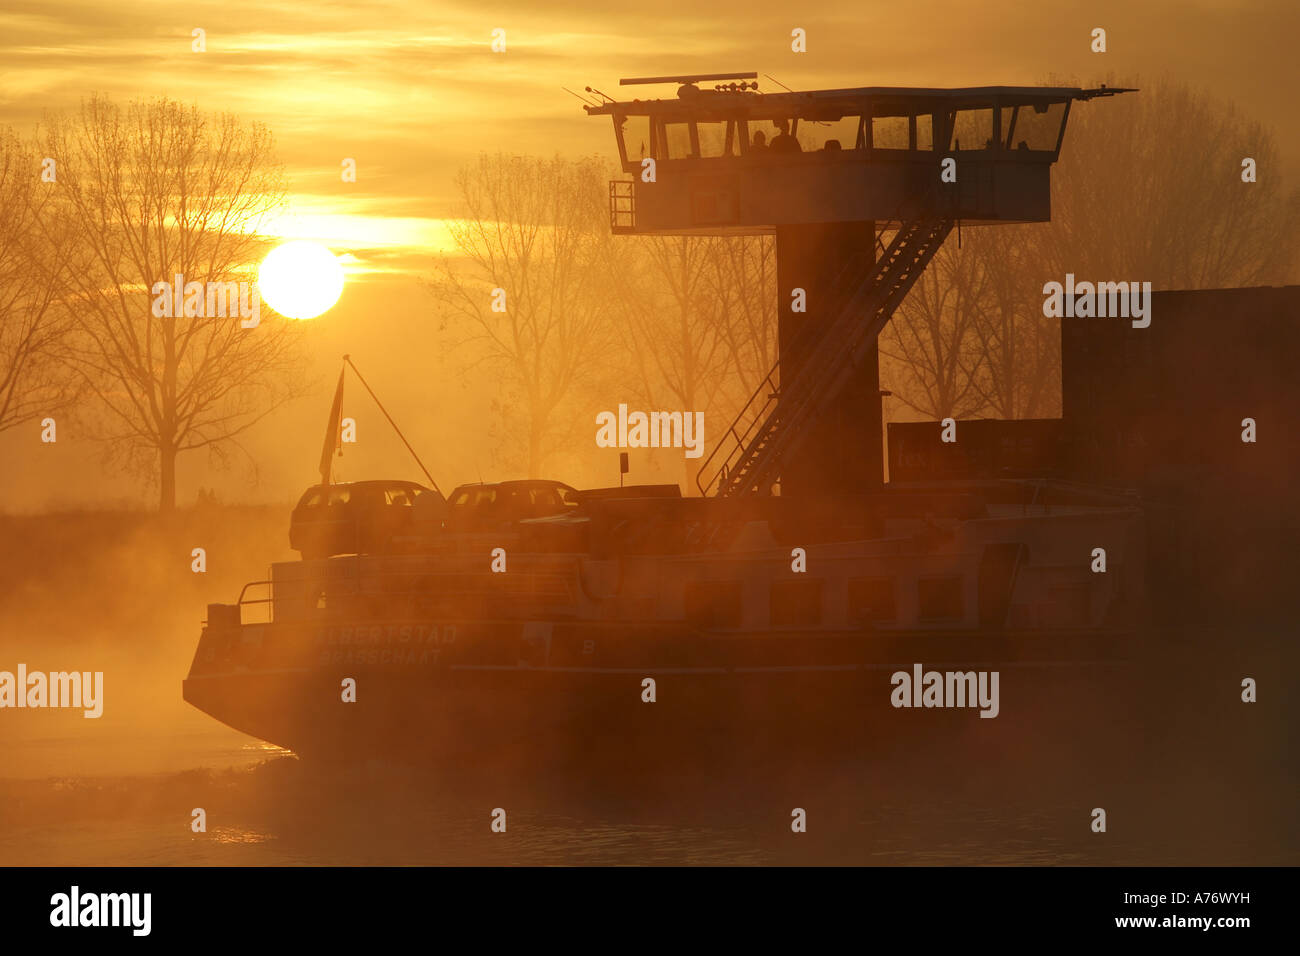 Freight ship on the Rhine near Worms, Rhineland-Palatinate, Germany Stock Photo